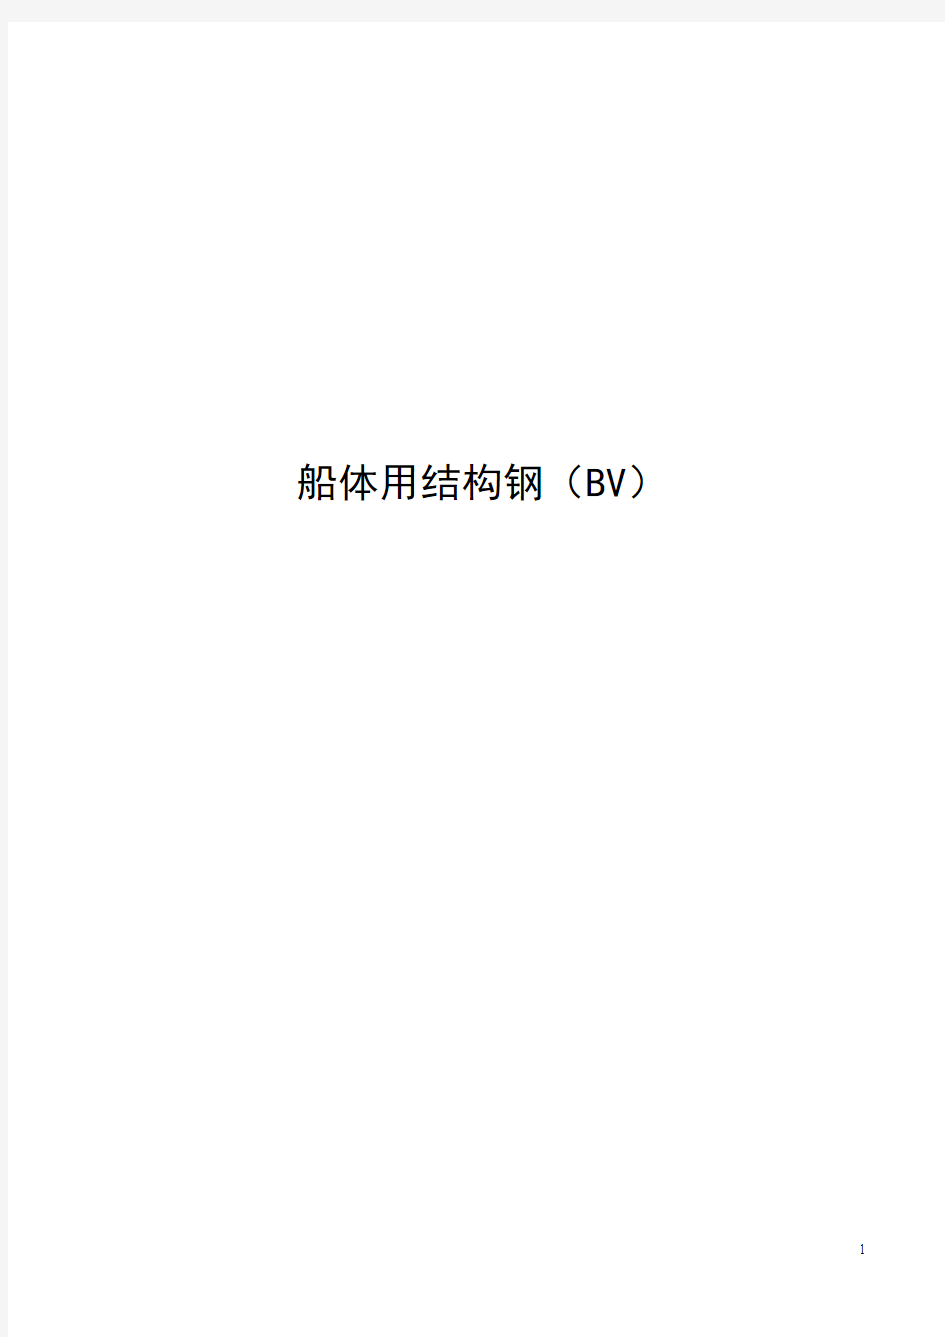 BV生产船规中文